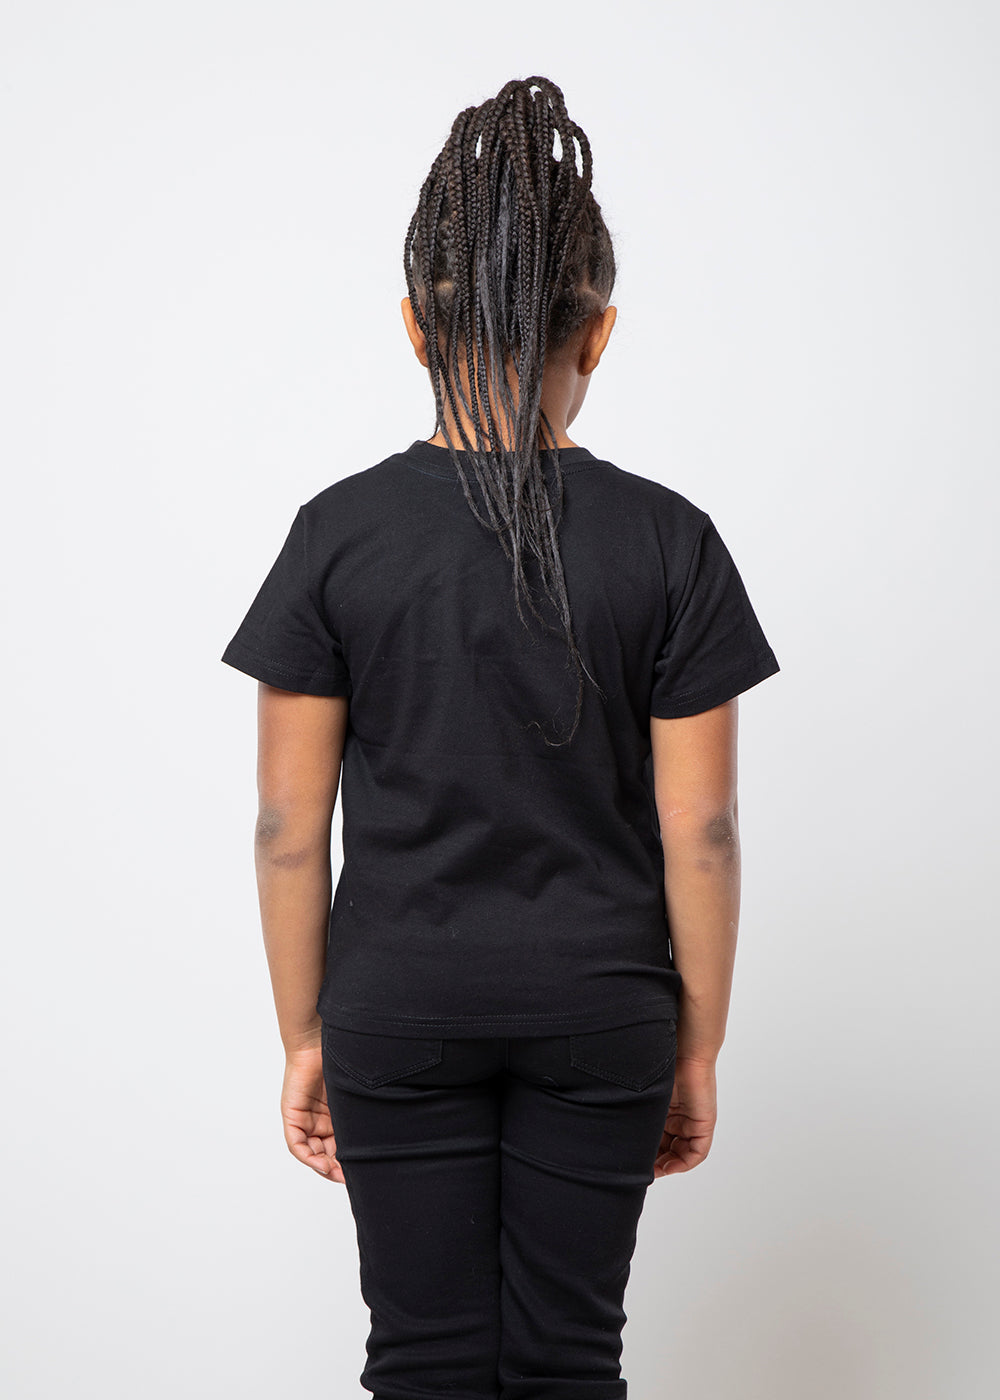 Haji Kid's African Print Applique T-shirt (Black/Black Red Kente) - Clearance